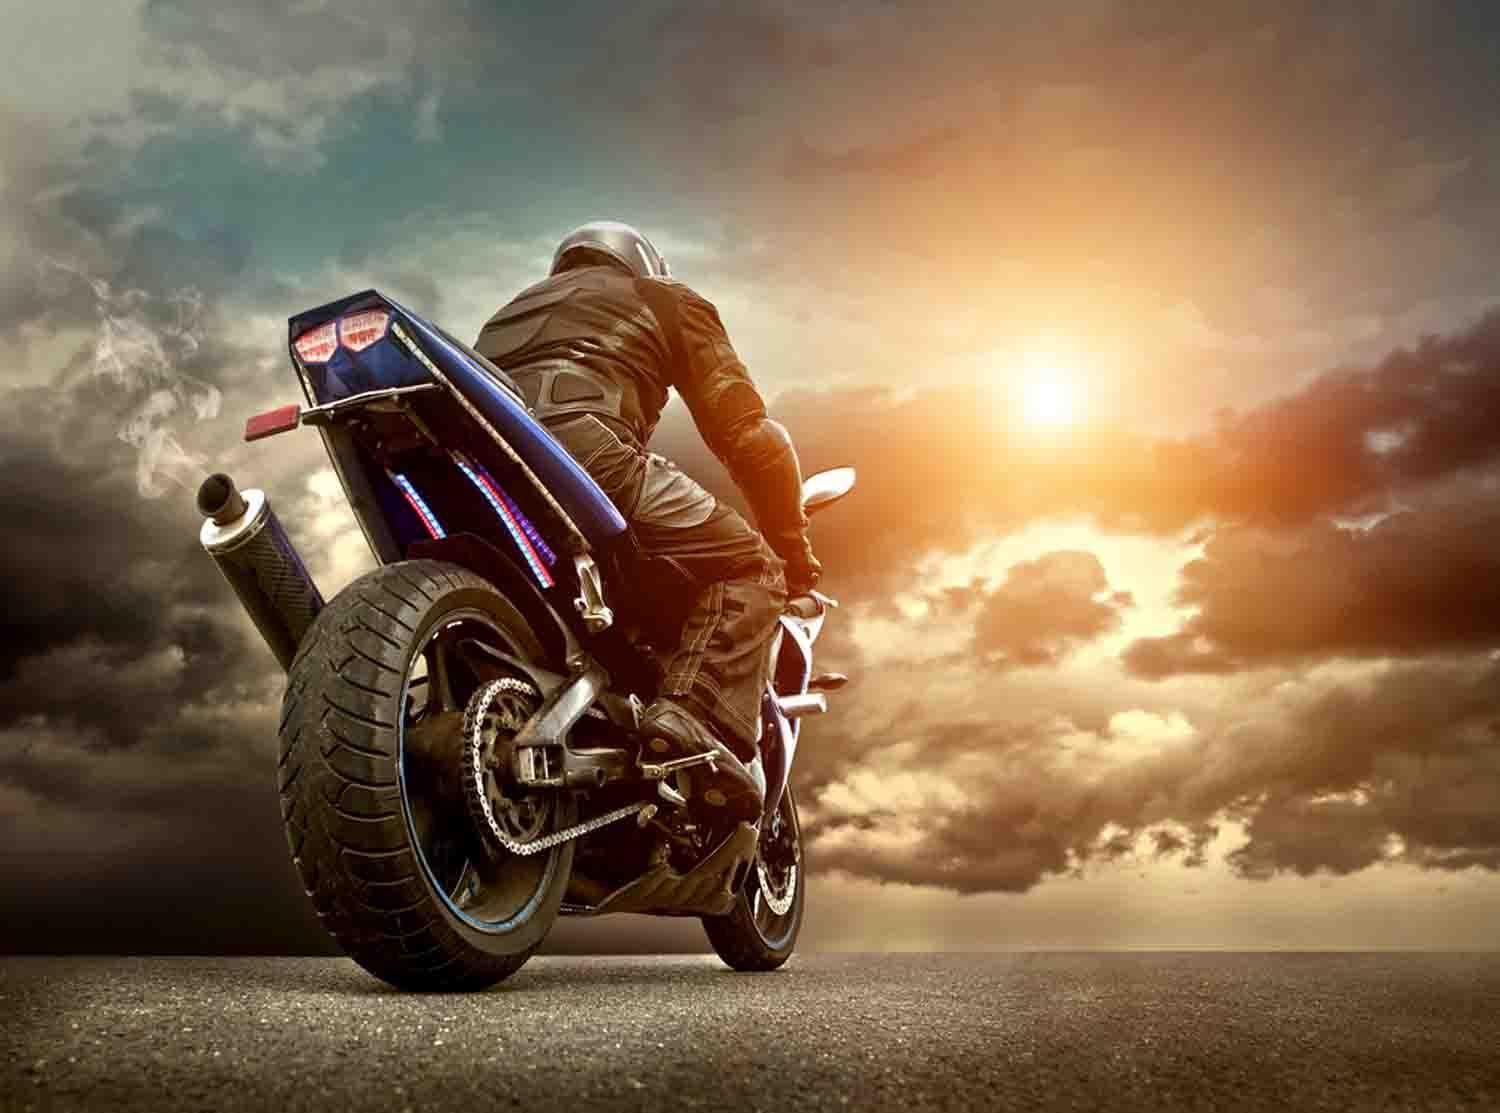 Descarga de APK de Motorcycle Wallpaper para Android